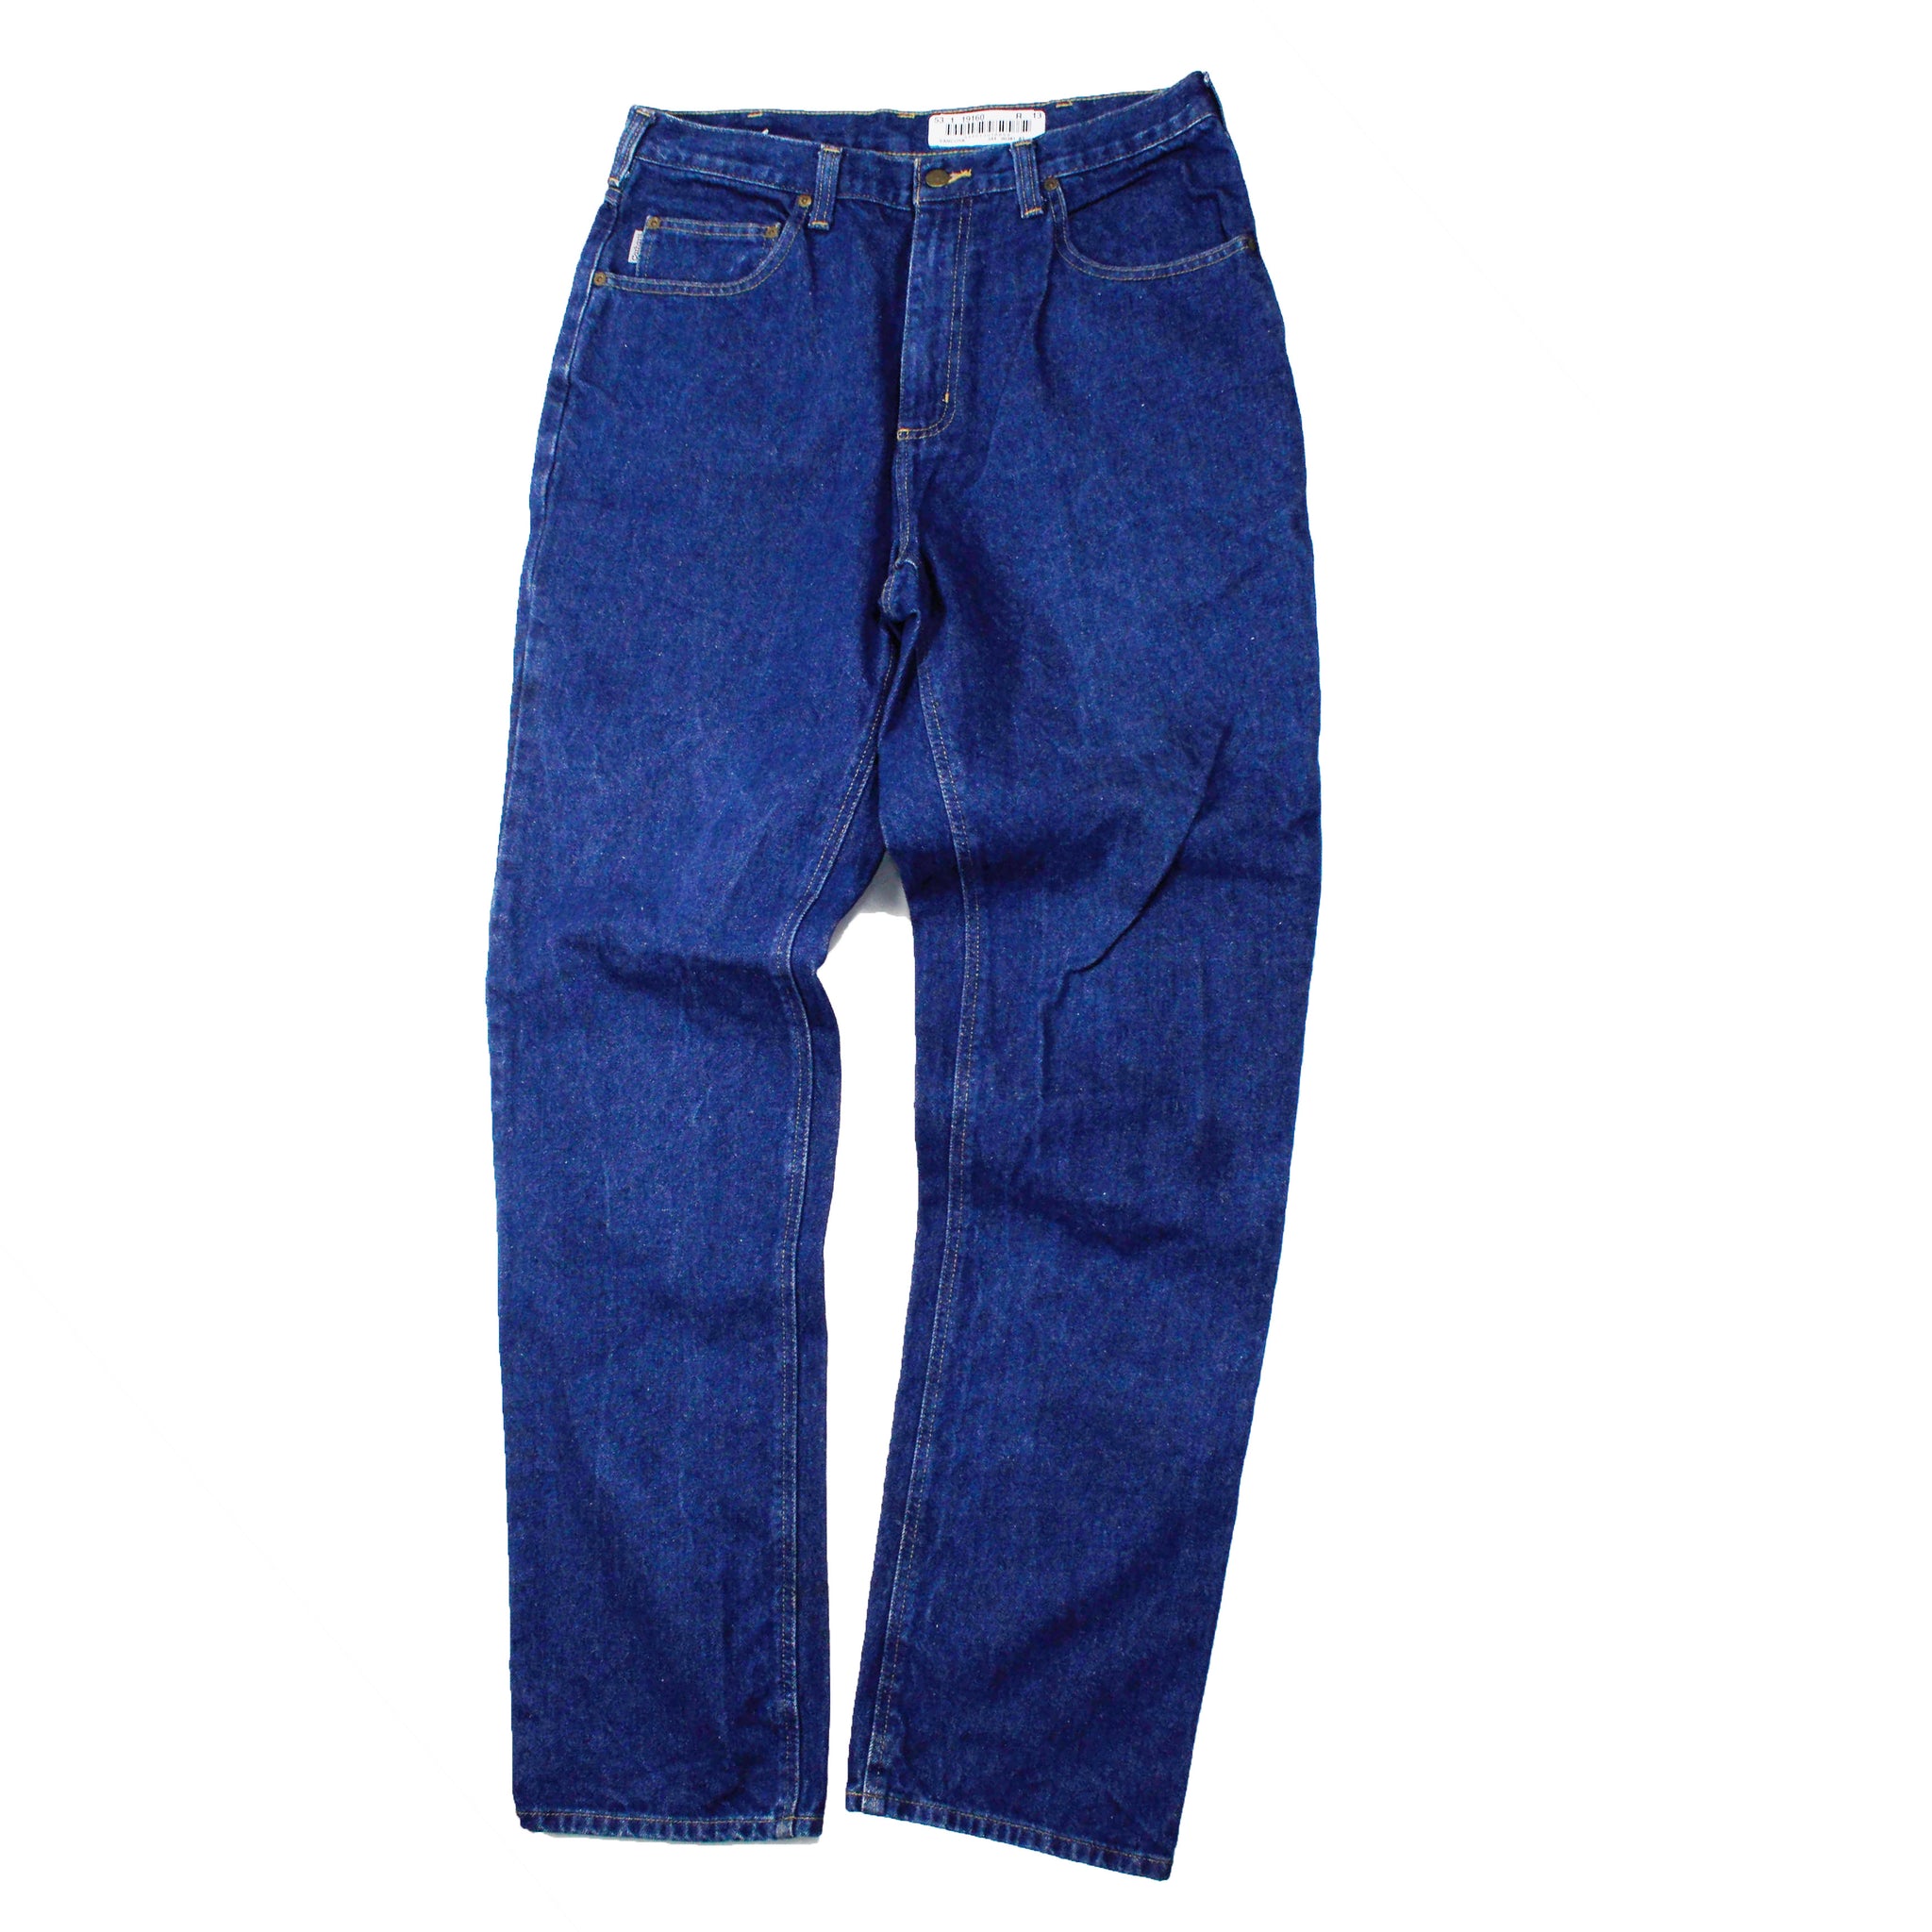 carhartt blue jeans 34/36